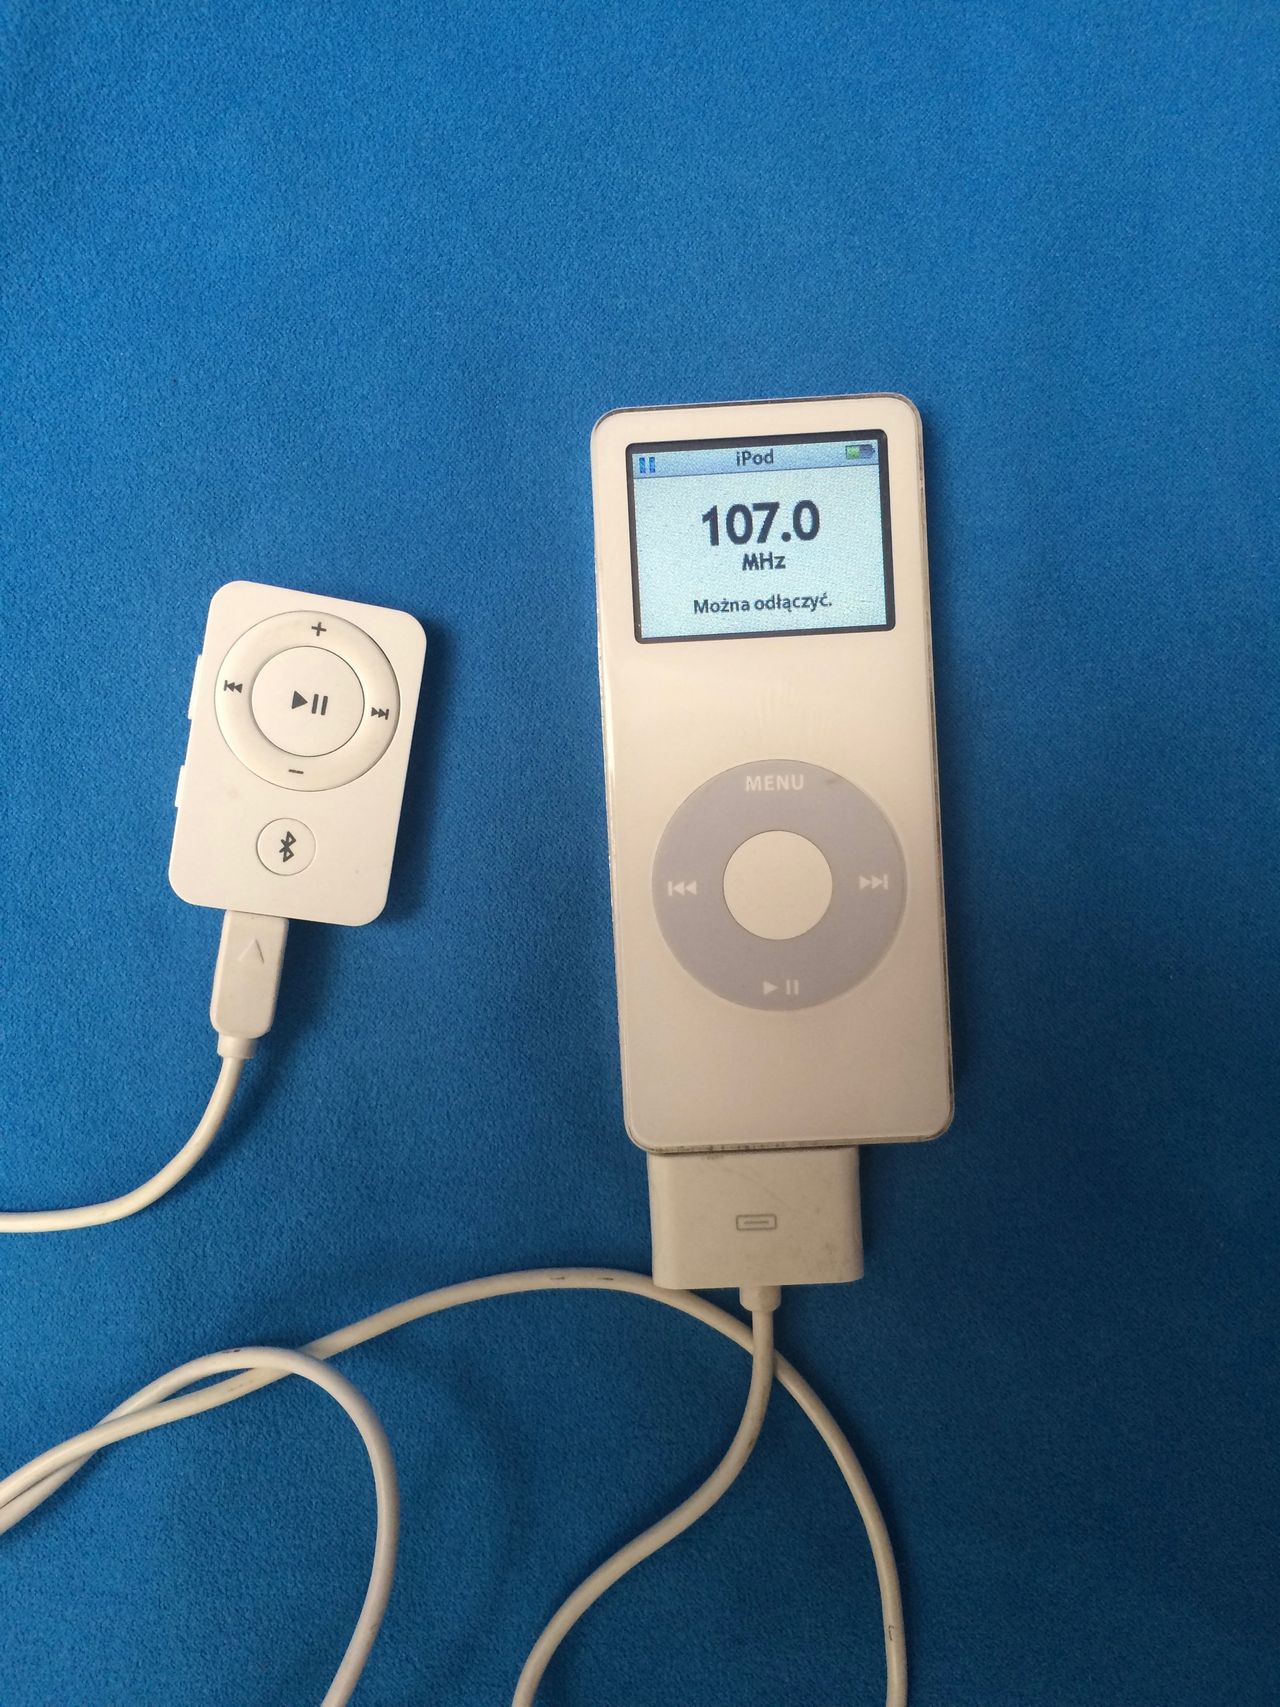 iPod Nano i Griffin Radio Remote Control, czyli dodajemy radio, bluetooth i pilota do iPoda Nano.